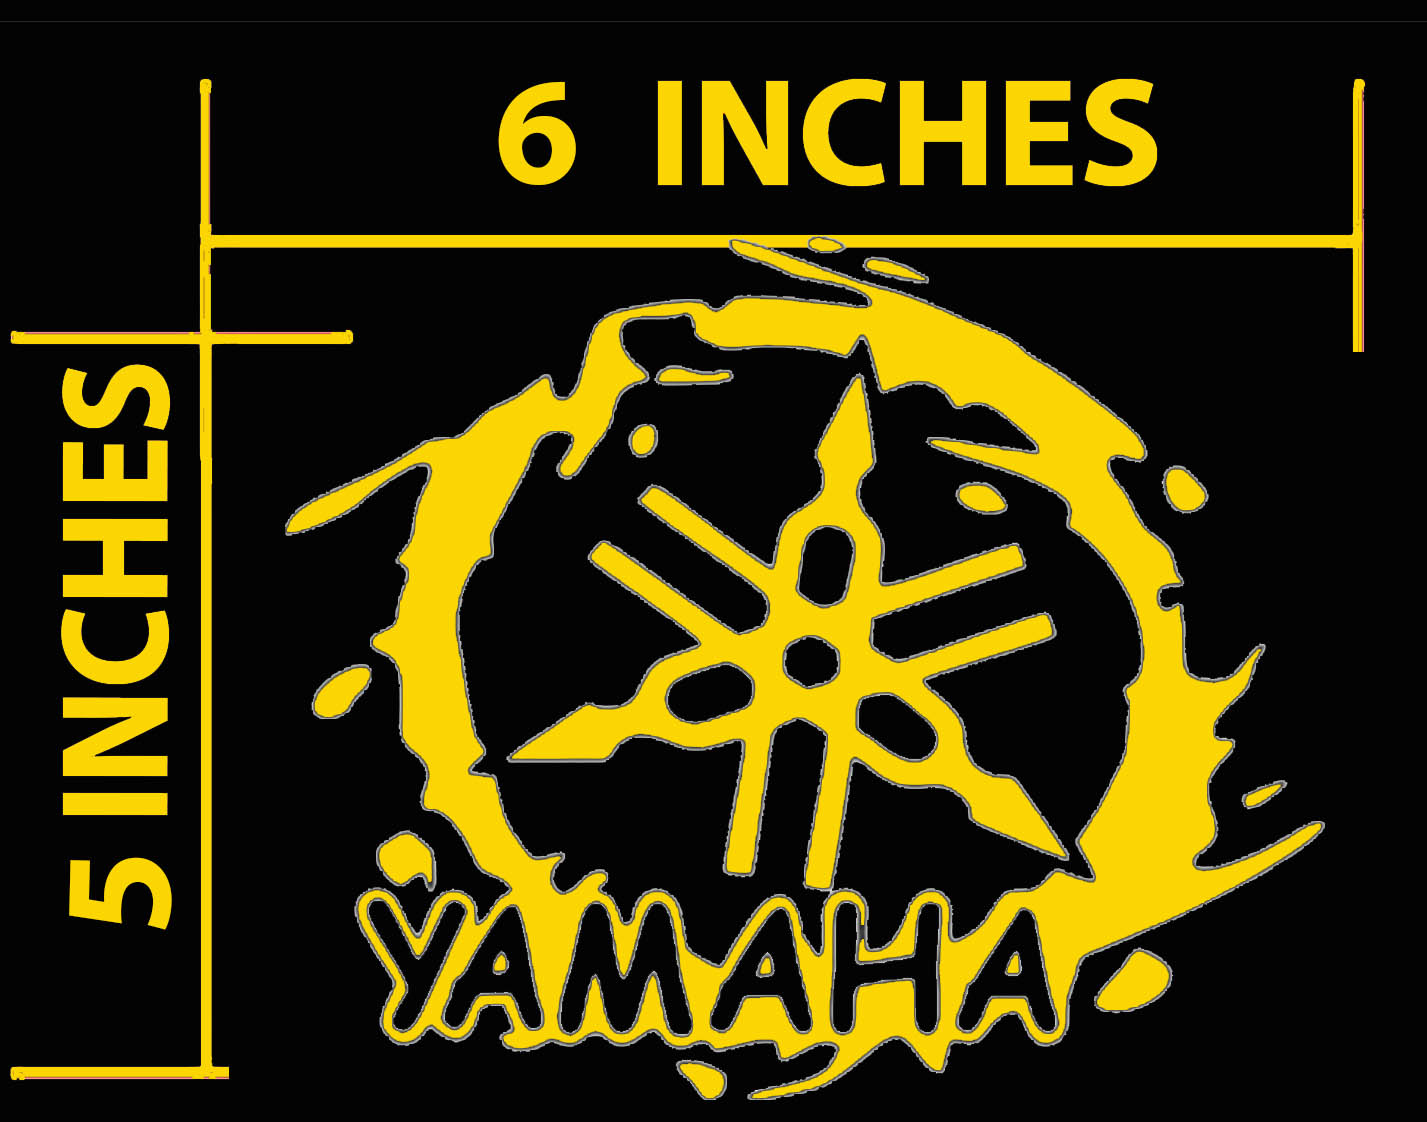 Yamaha motorcycle club needs powerful new logo | Logo design contest |  99designs